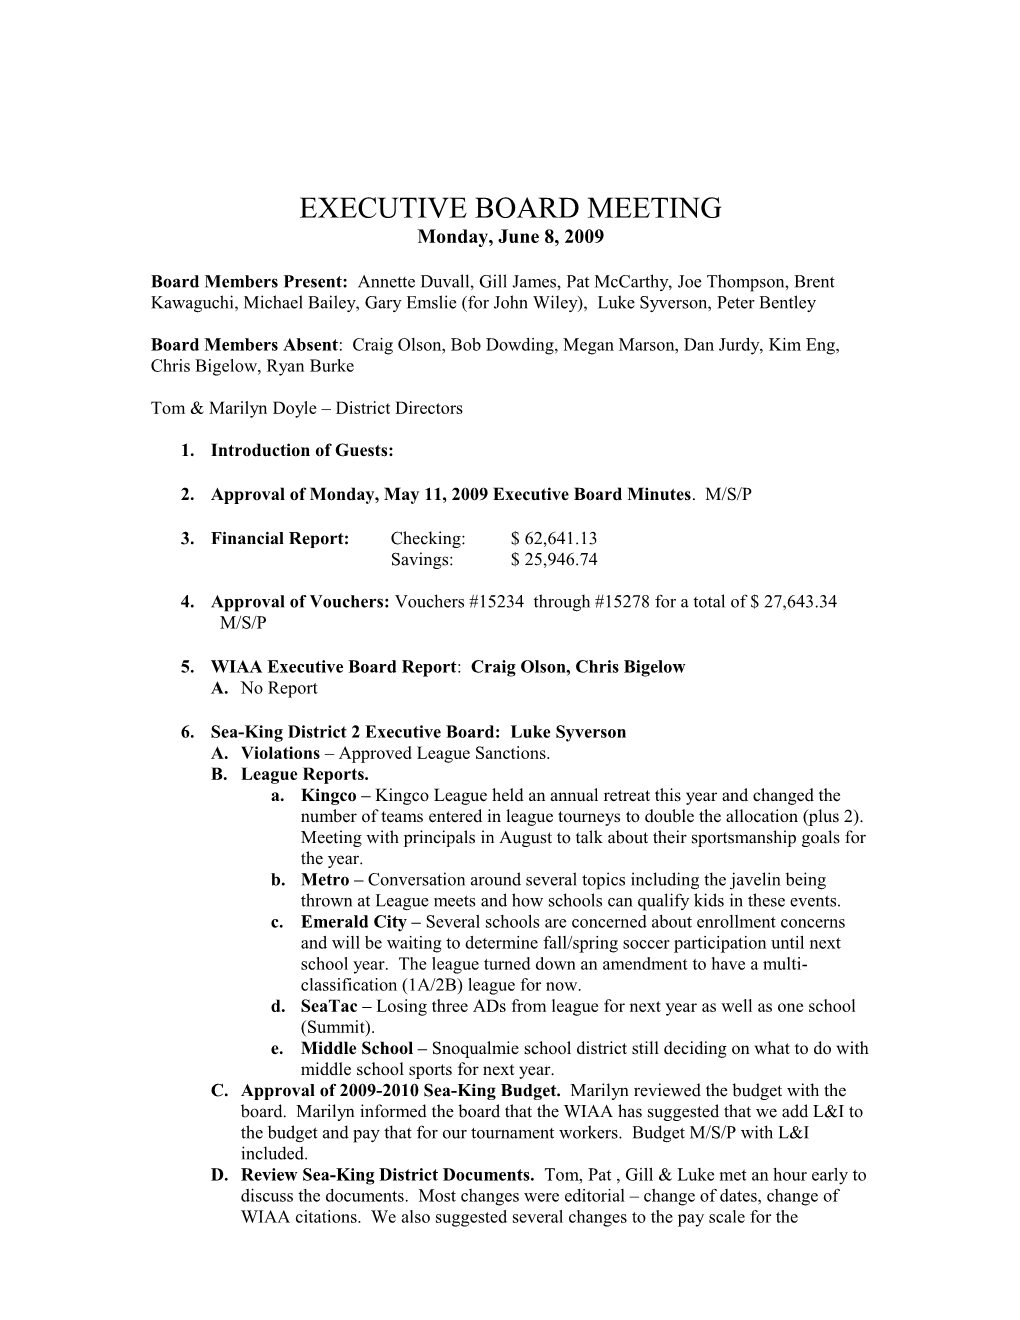 Executive Board Meeting s9